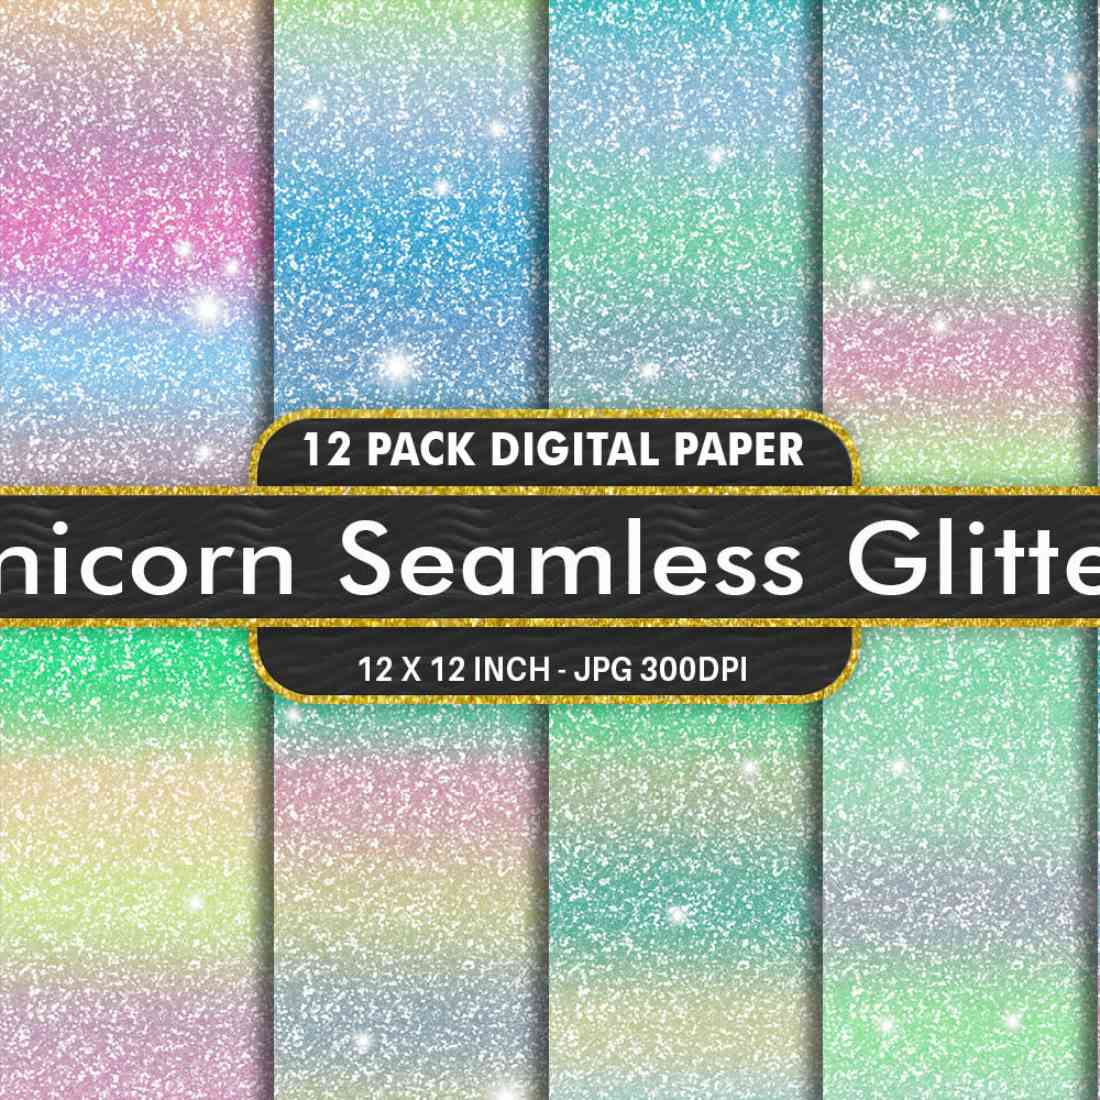 Digital Paper Glitter Unicorn Texture cover image.